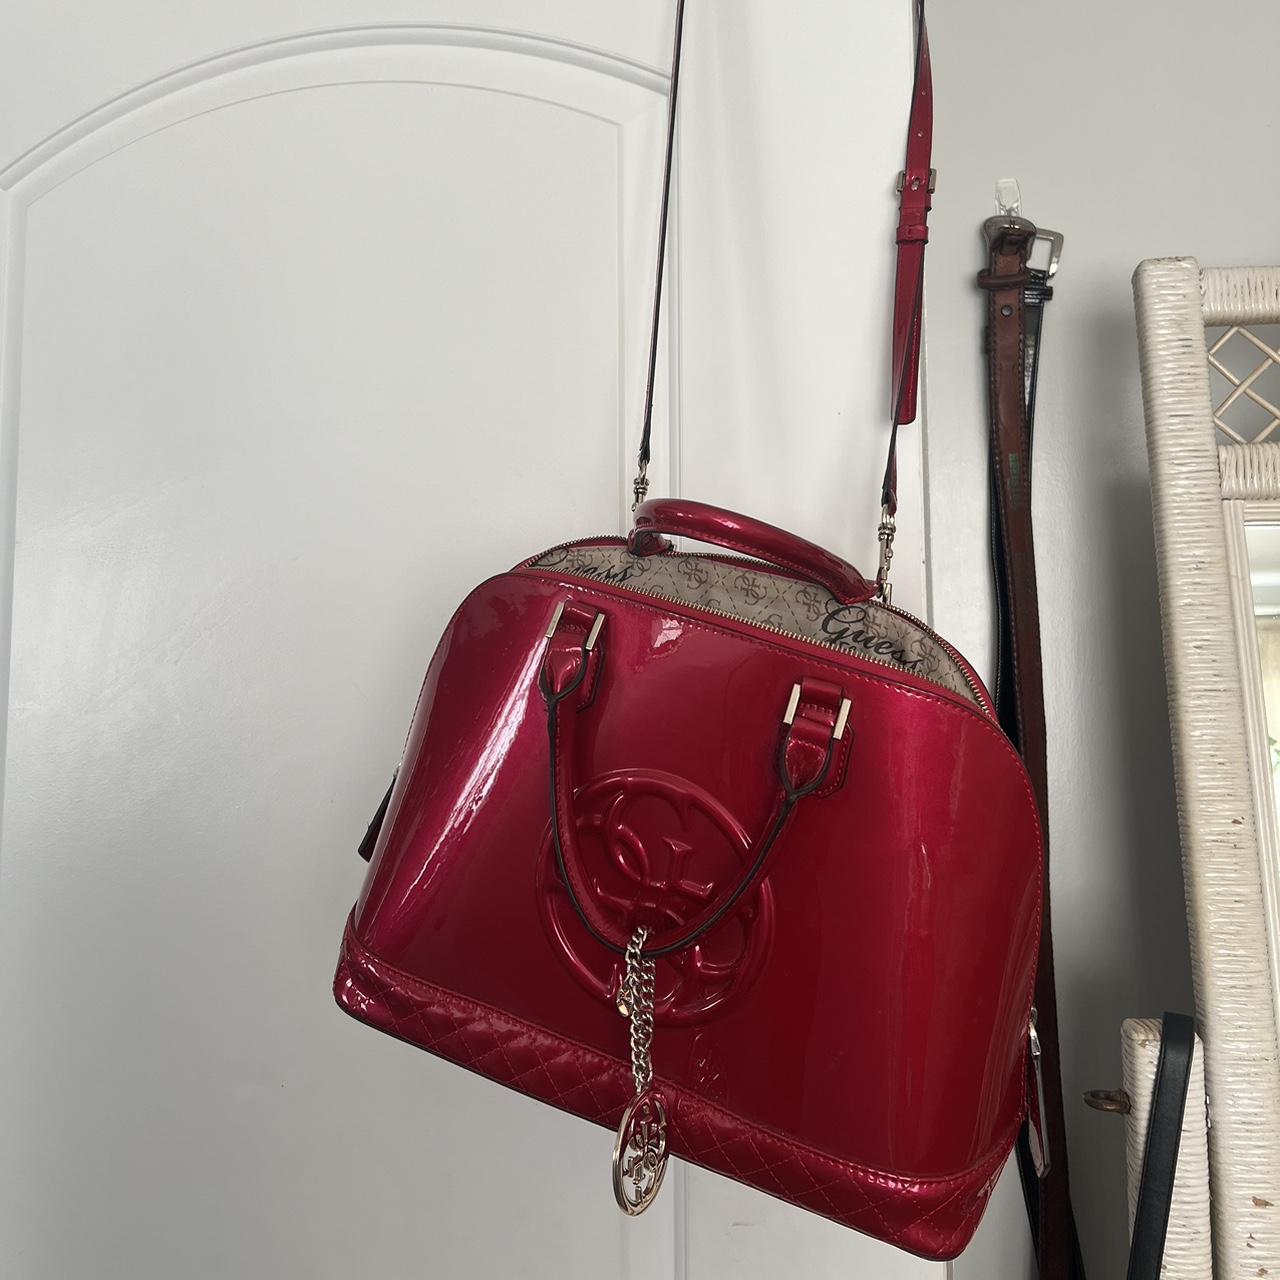 Guess bags? : r/handbags